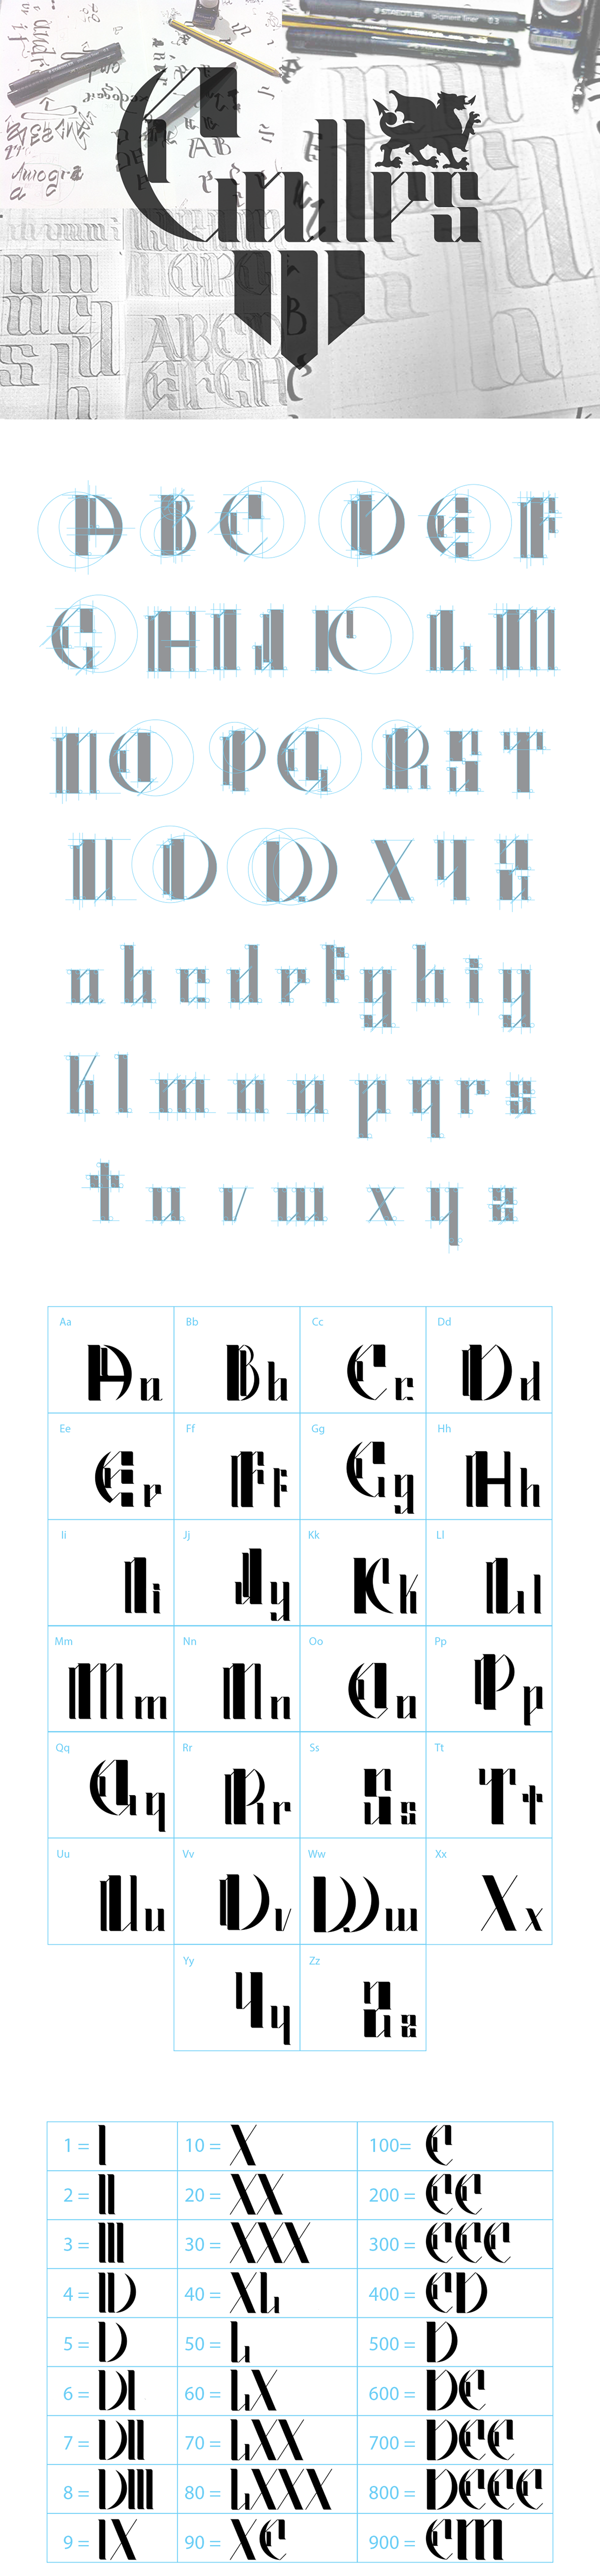 font Blackletter serif Old London galles calligraphic Typeface black letter typo gothique linear modern lettering